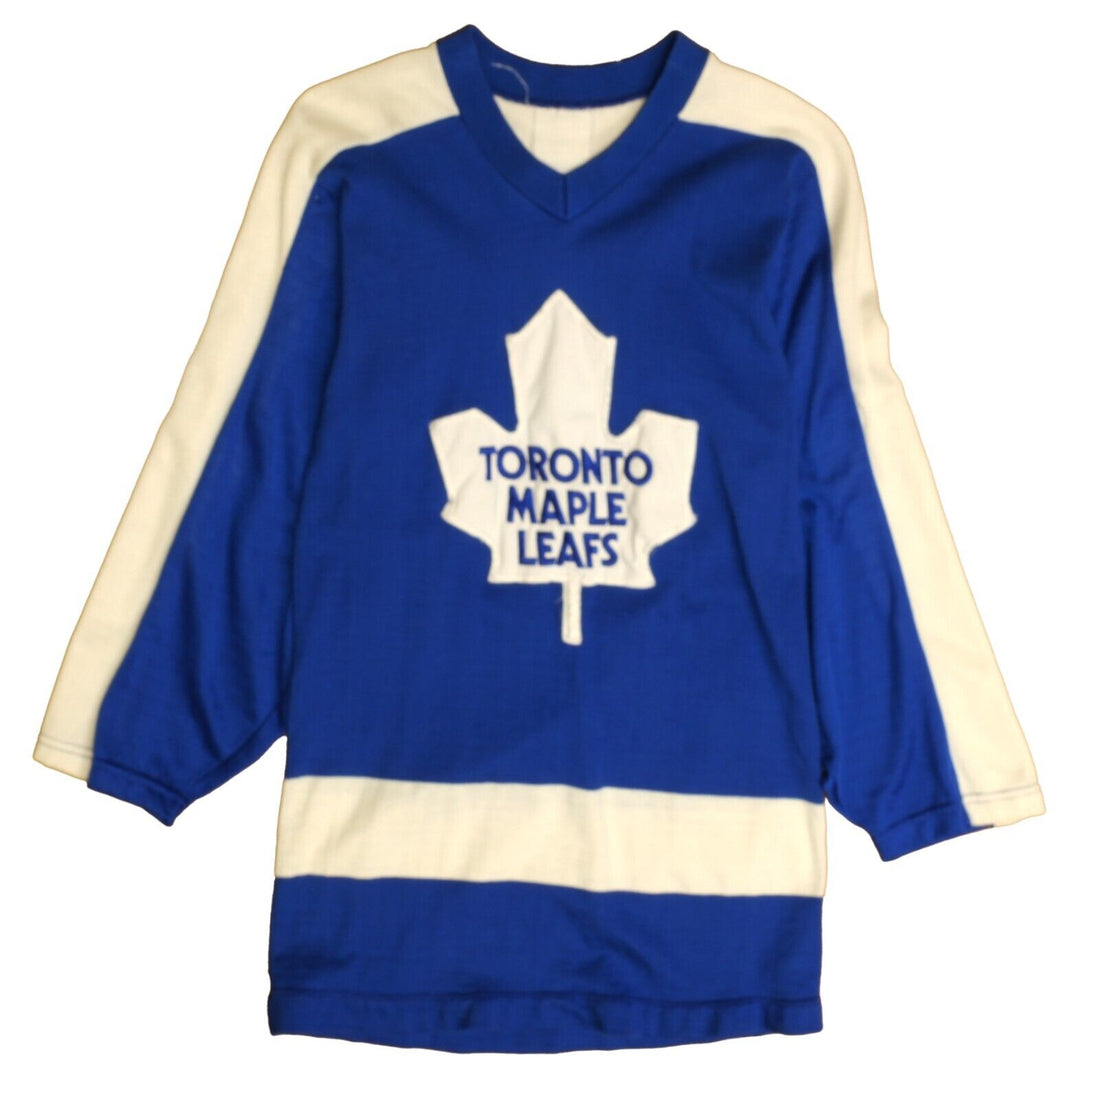 Vintage Toronto Maple Leafs Hockey Jersey Size XS Blue 70s NHL